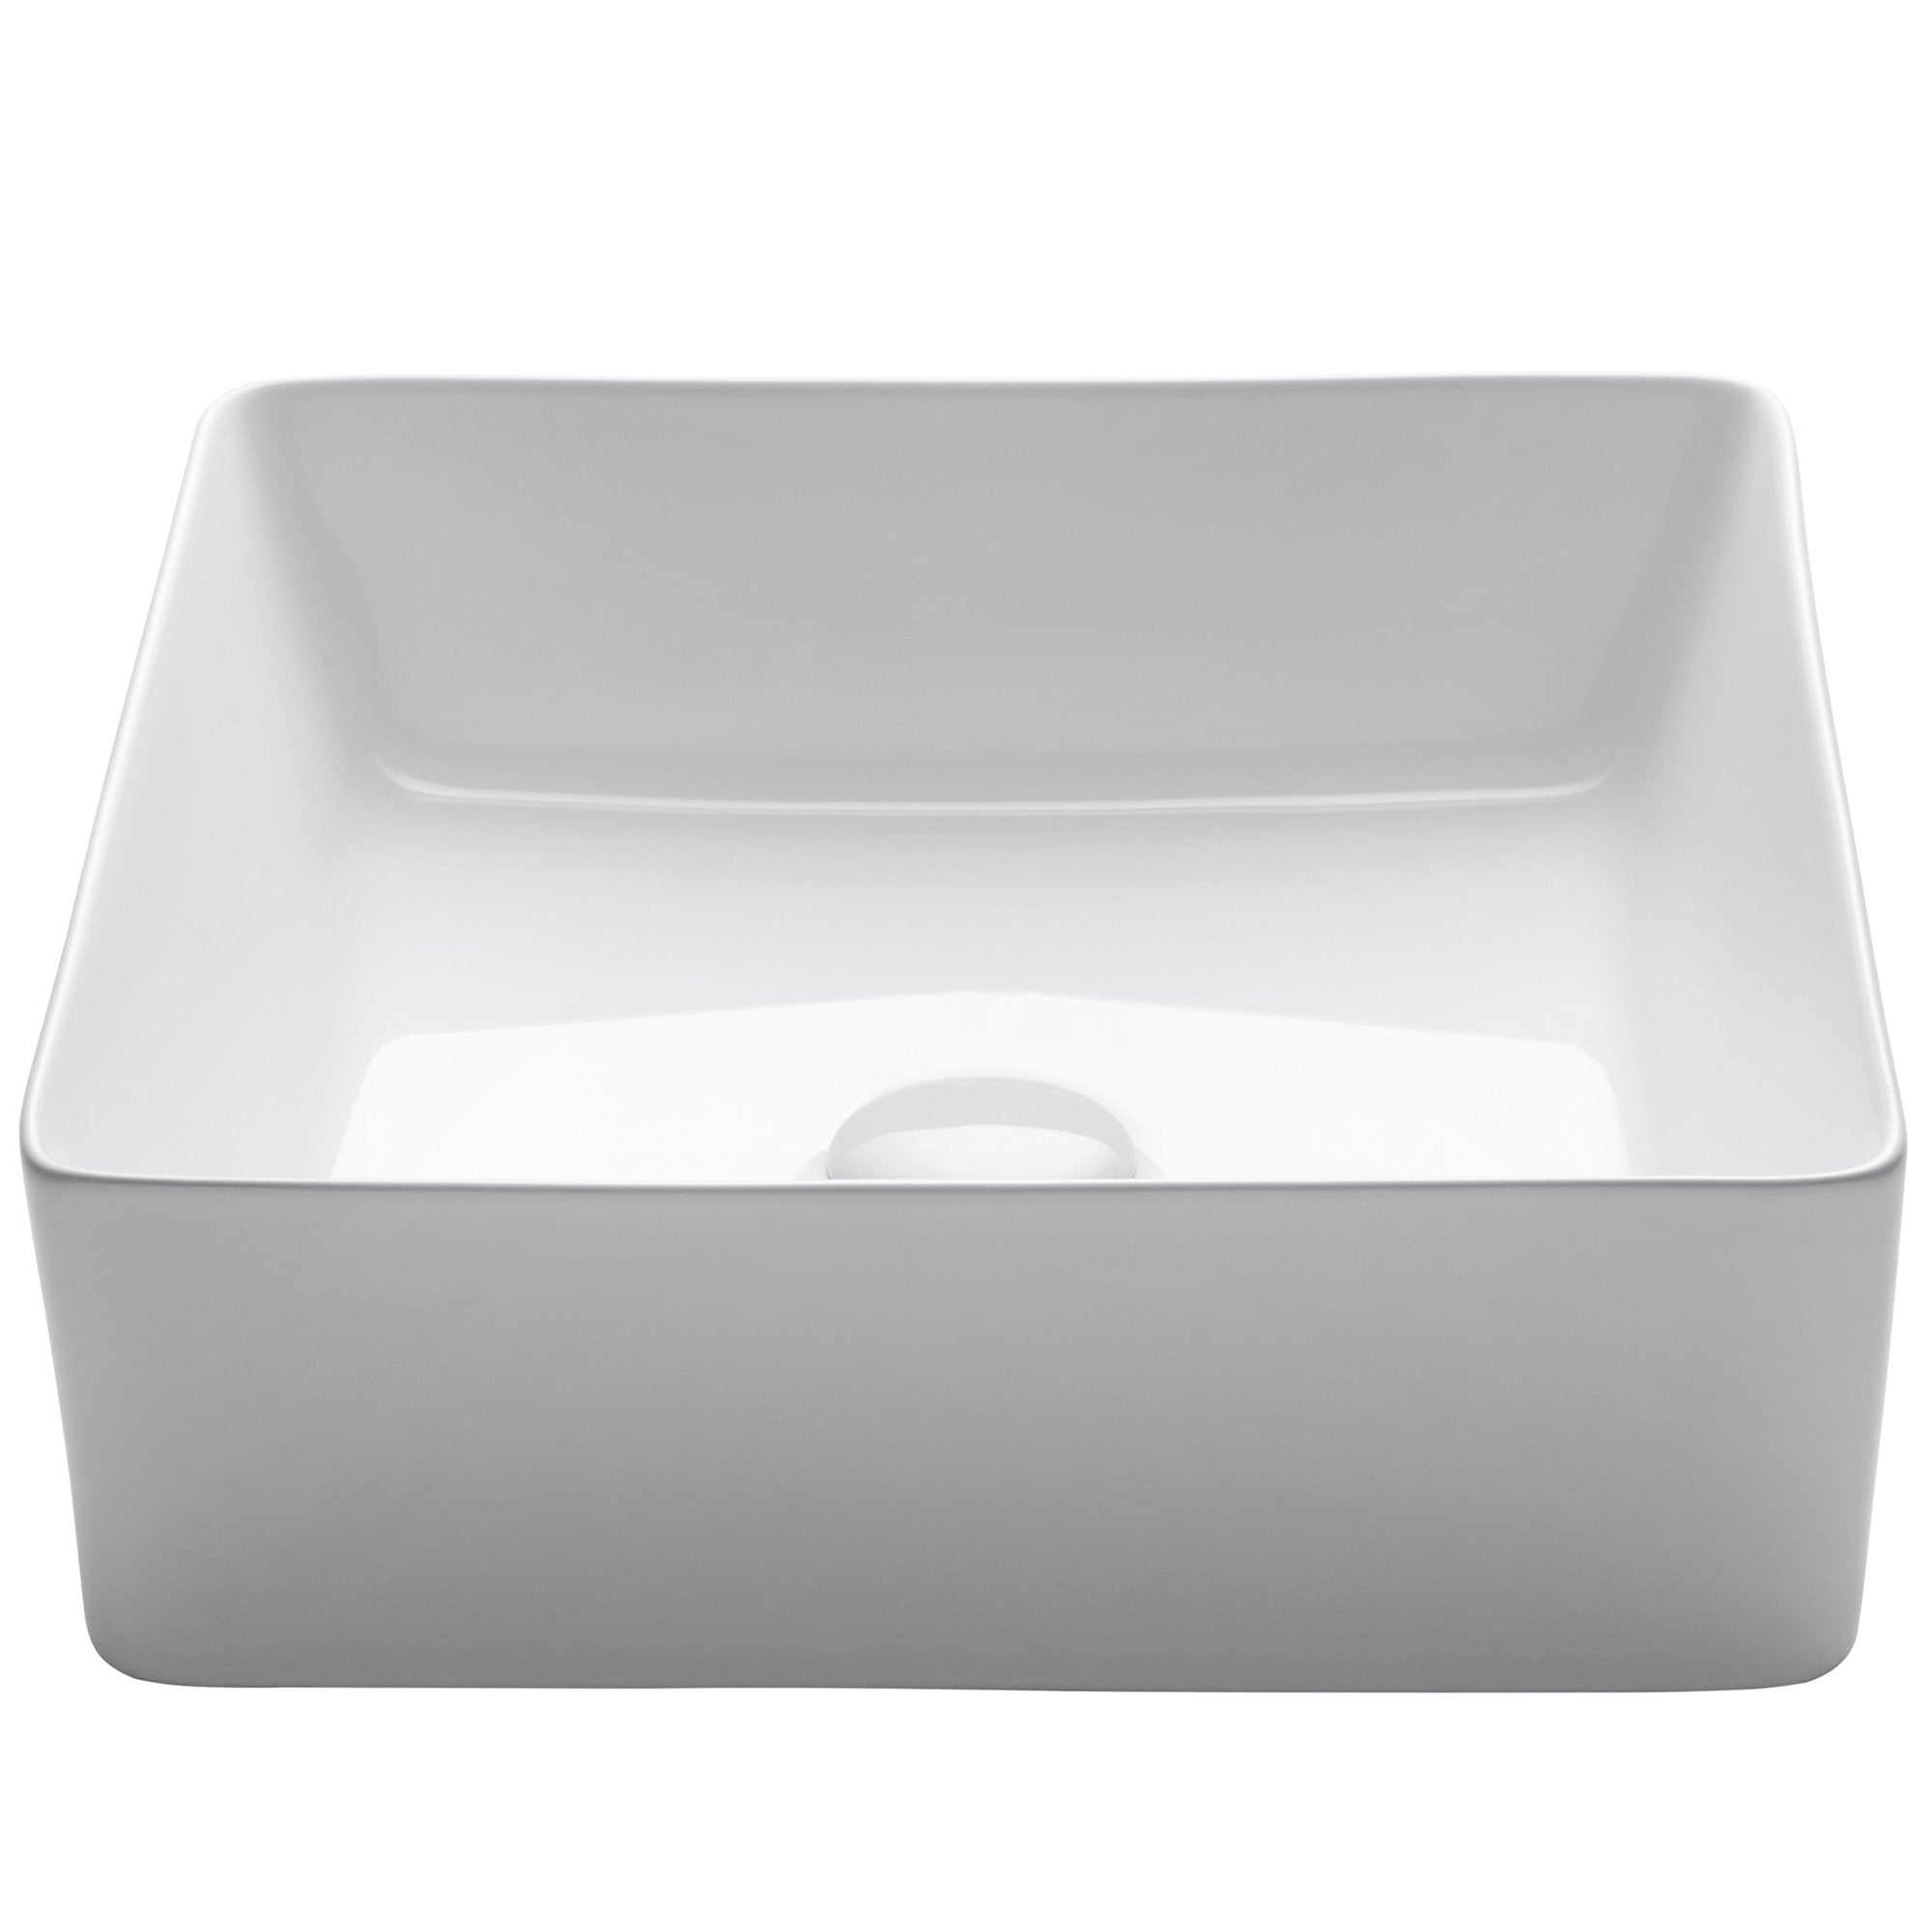 KRAUS Viva„¢ Square White Porcelain Ceramic Vessel Bathroom Sink-Bathroom Sinks-KRAUS